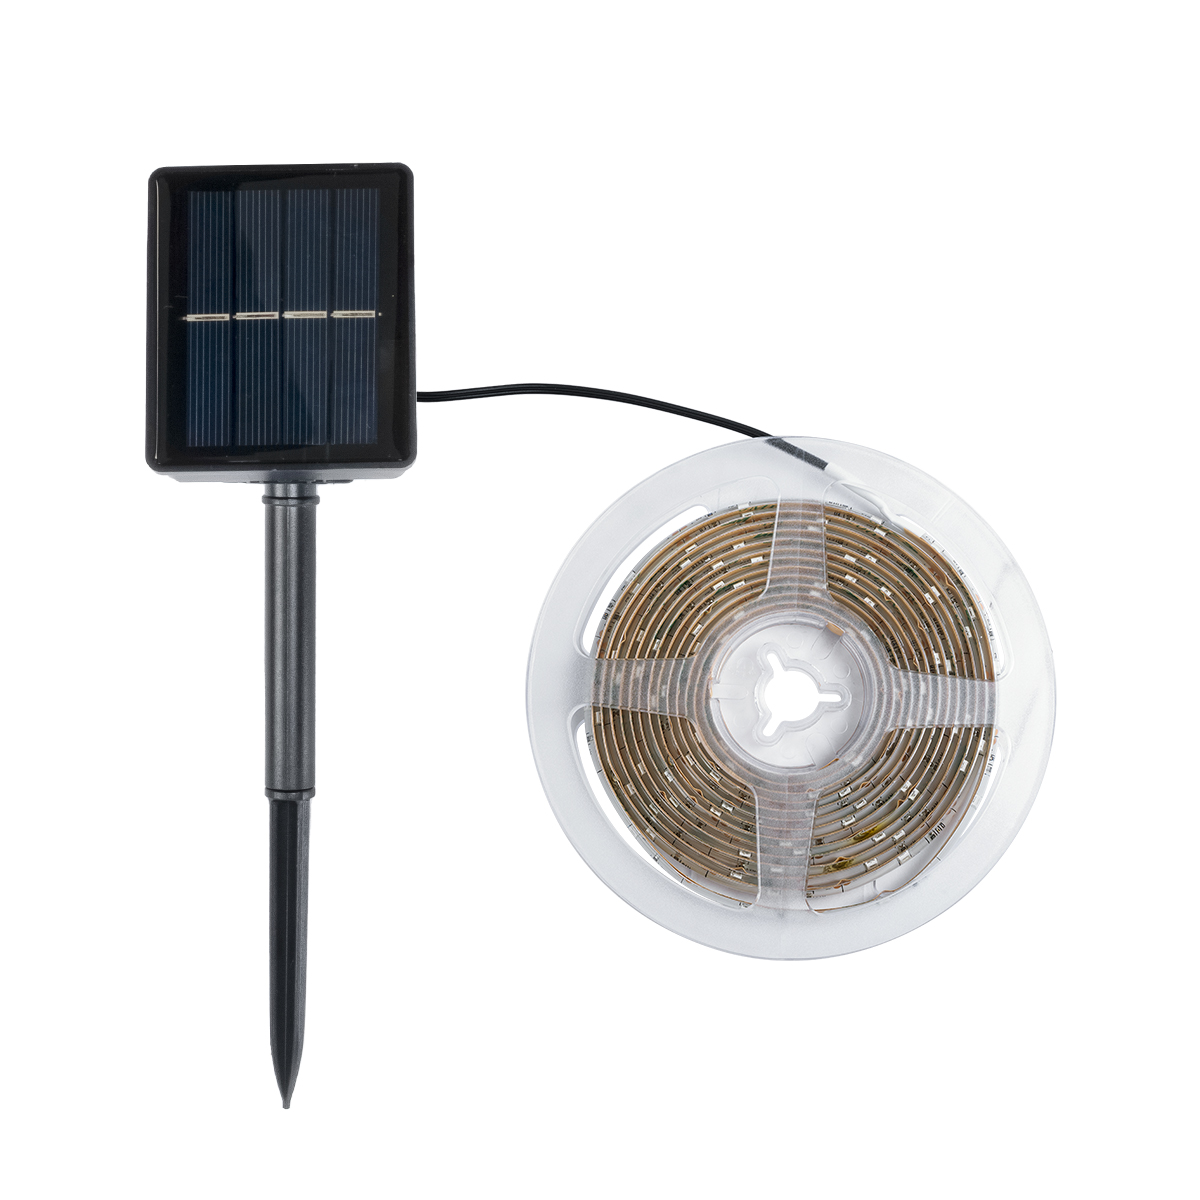 GloboStar® SOLAR LEDSTRIP 70411 Αυτόνομο Ηλιακό Σετ Ταινία LED 3m 3W/3m 90LED 2835 SMD 30lm/m 120° με Ενσωματωμένα Προγράμματα Λειτουργίας – Αδιάβροχο IP65 – RGB – Μ300 x Π0.8 x Υ0.3cm – 2 Χρόνια Εγγύηση